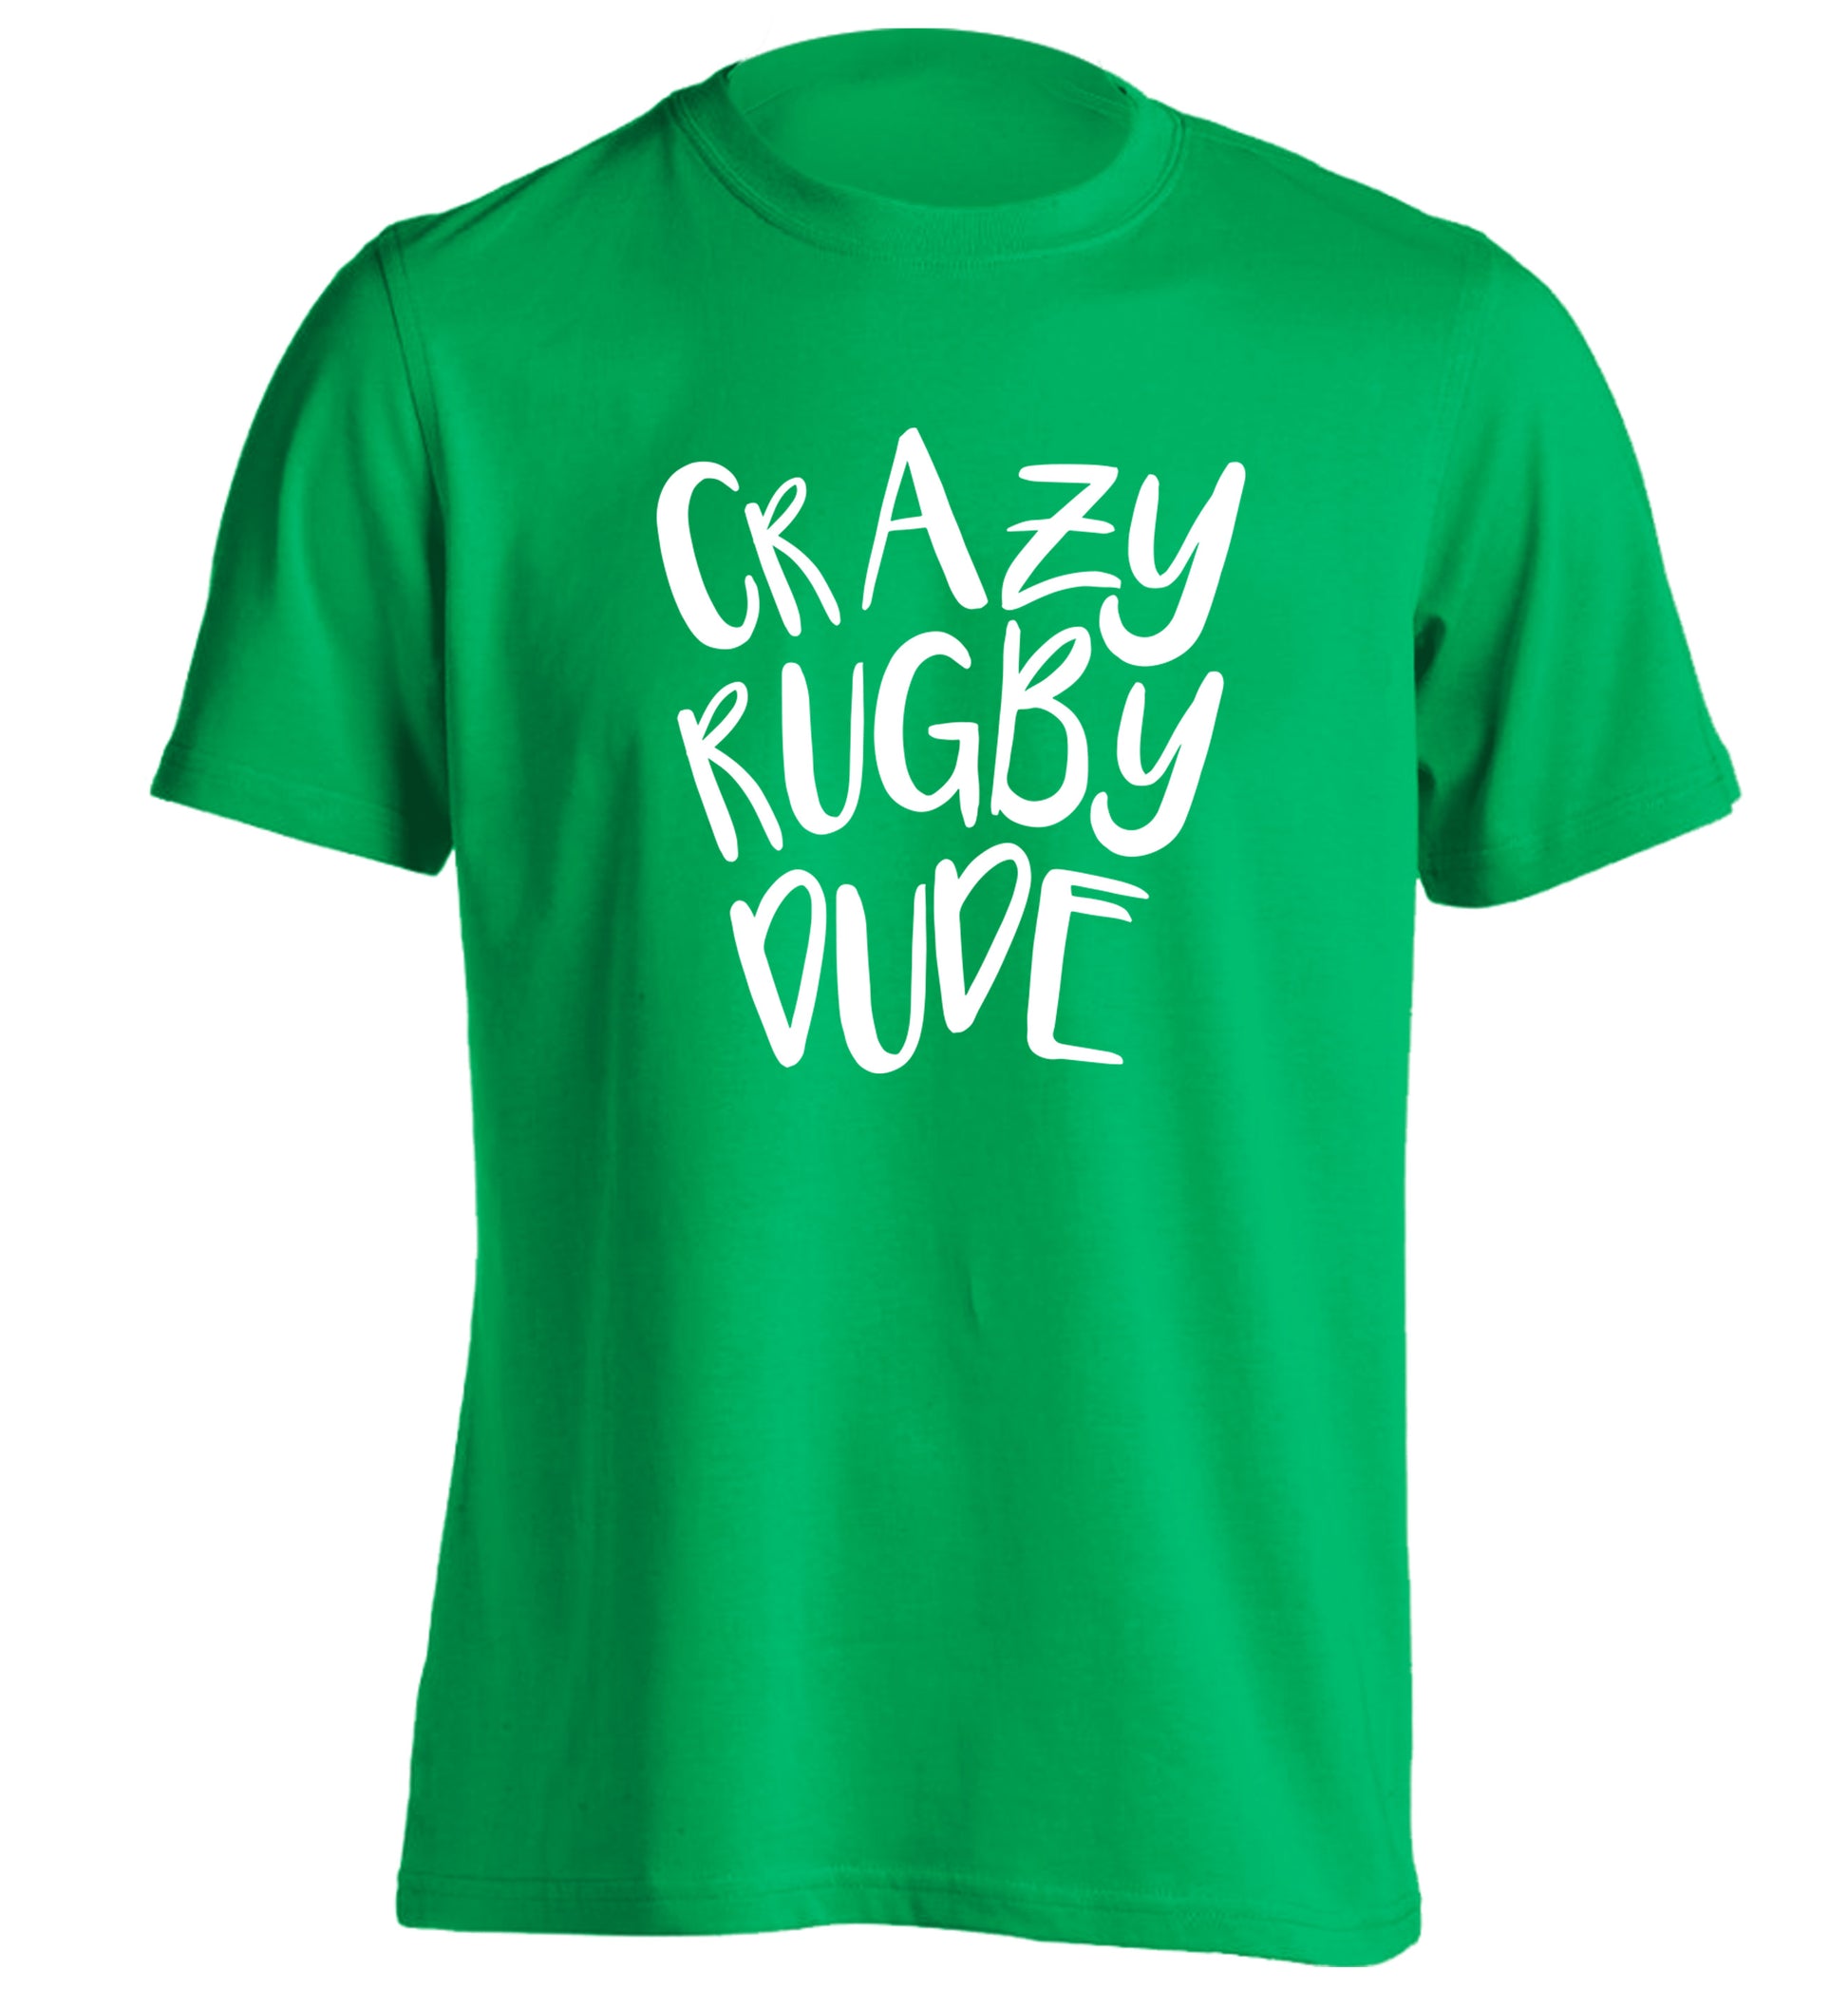 Crazy rugby dude adults unisex green Tshirt 2XL